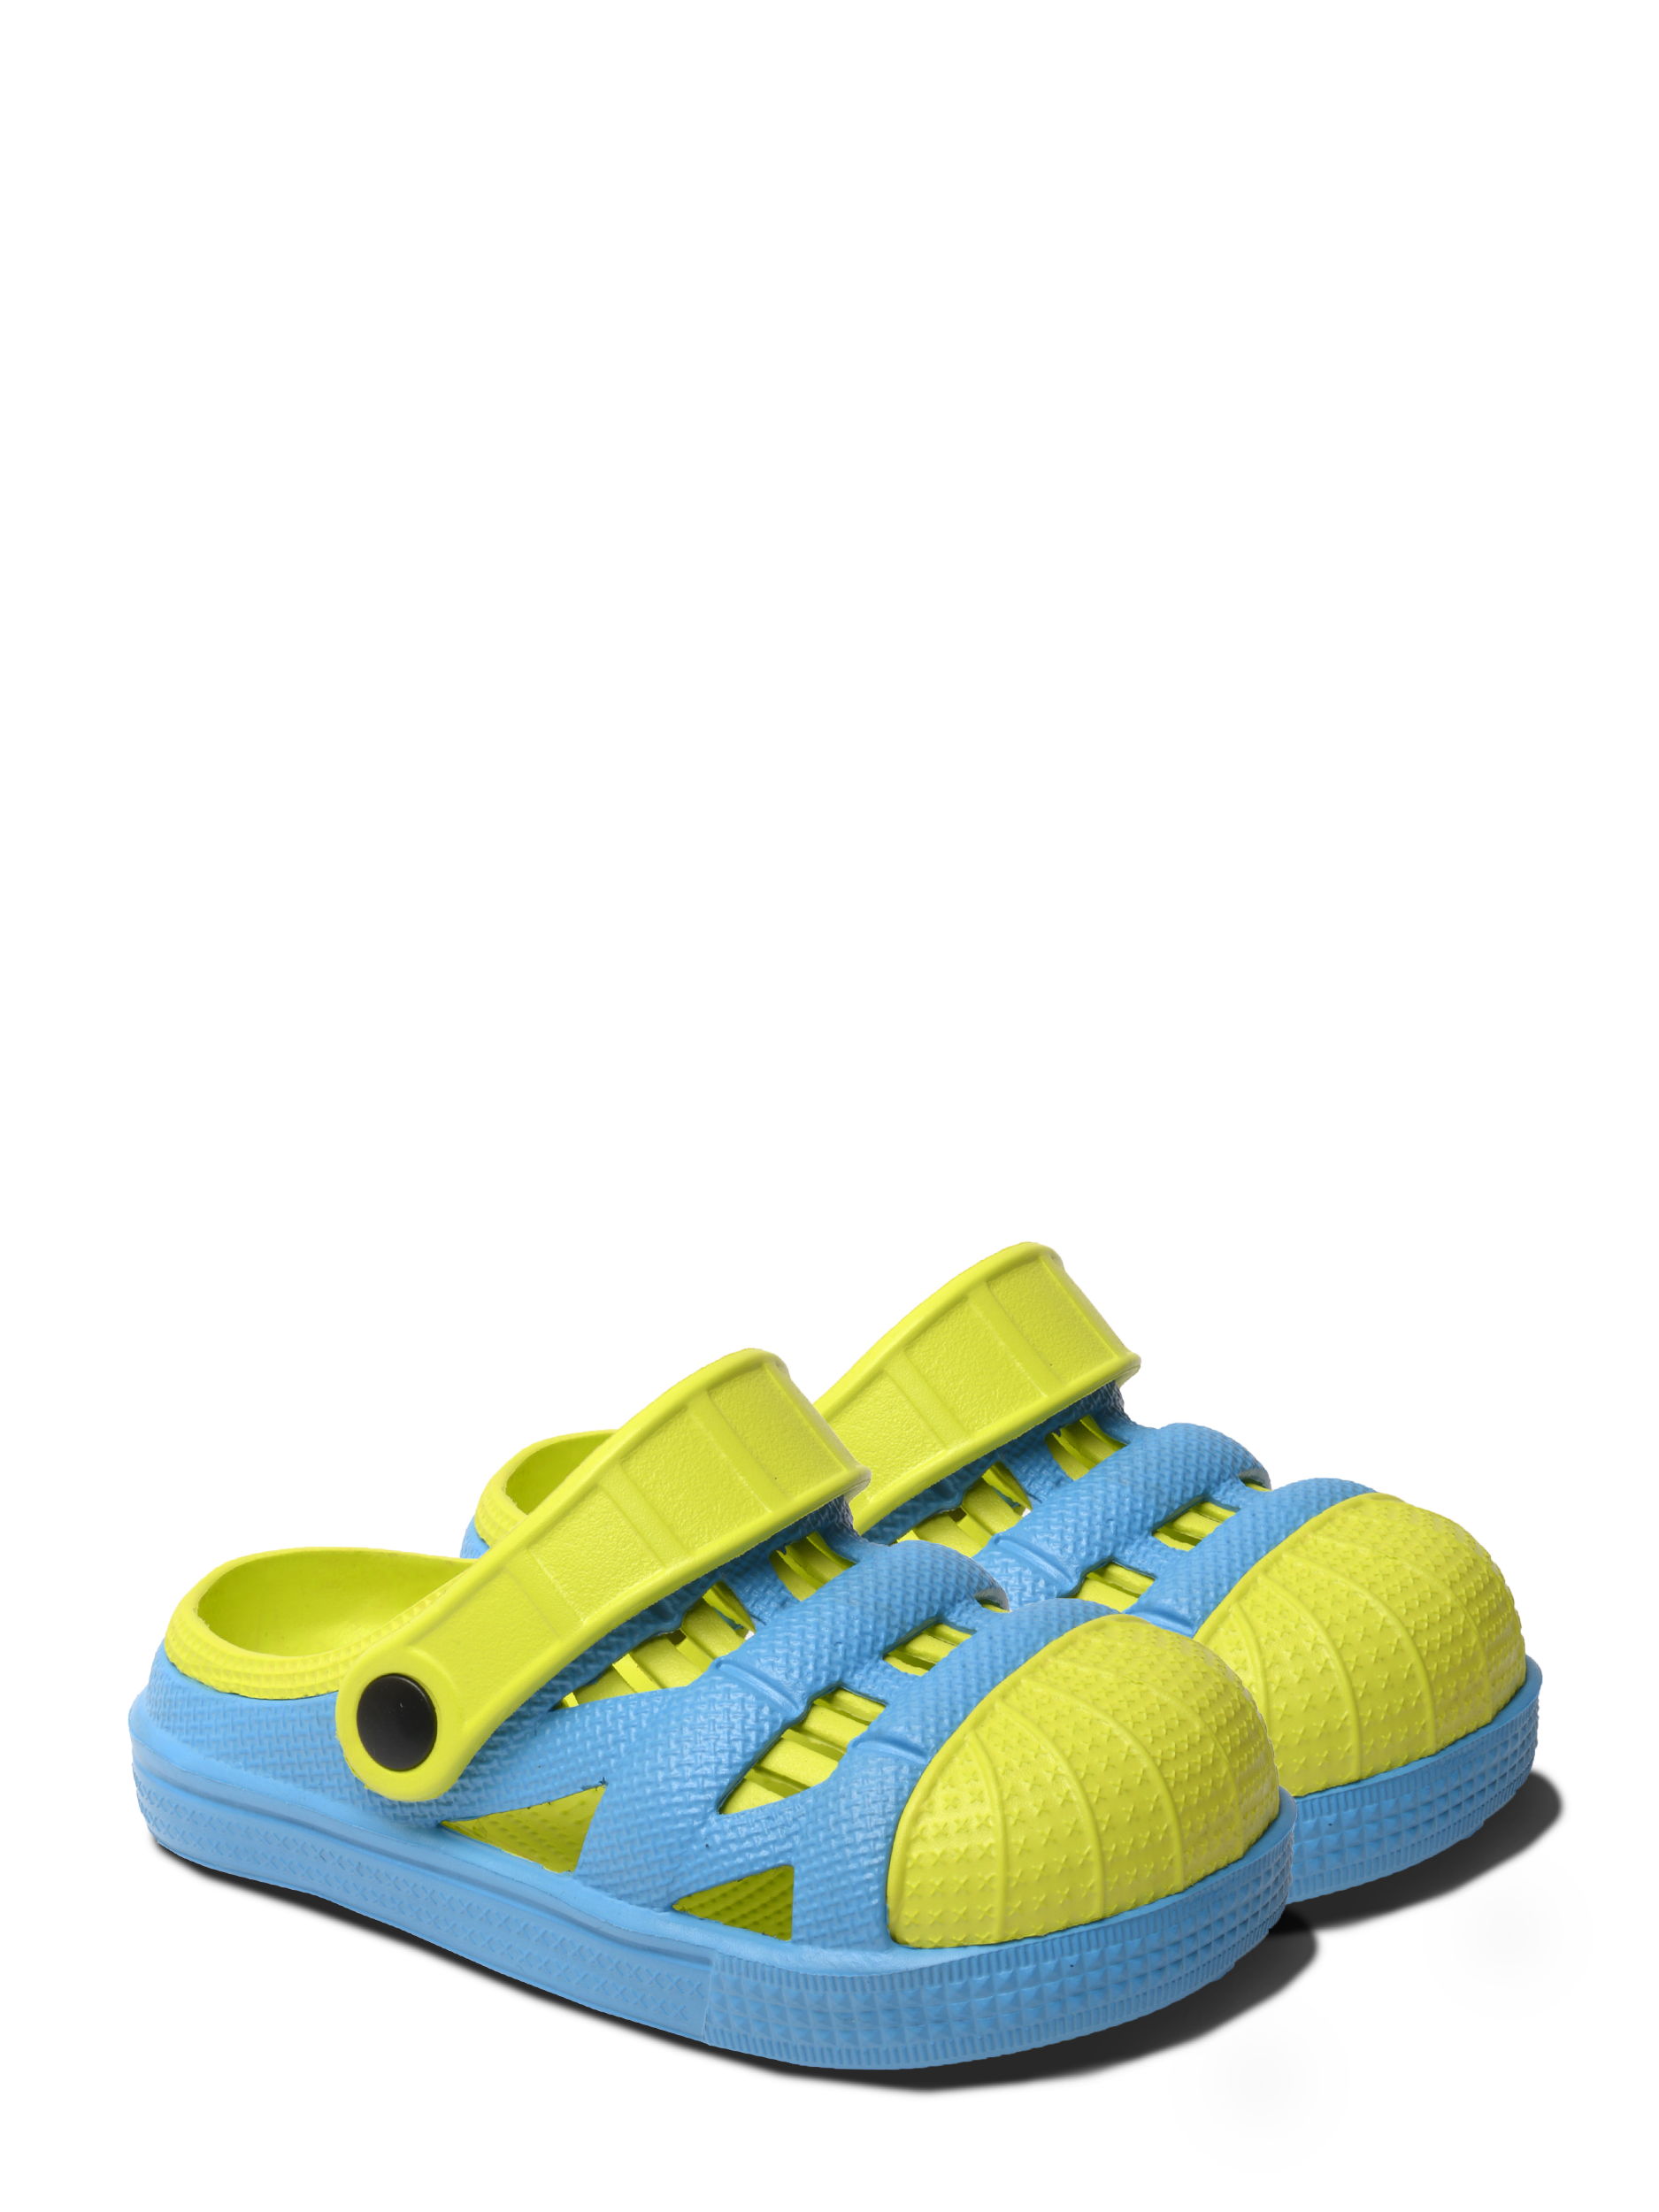 Kids Lightweight Sandals - Blue/Lime [size 29 only]